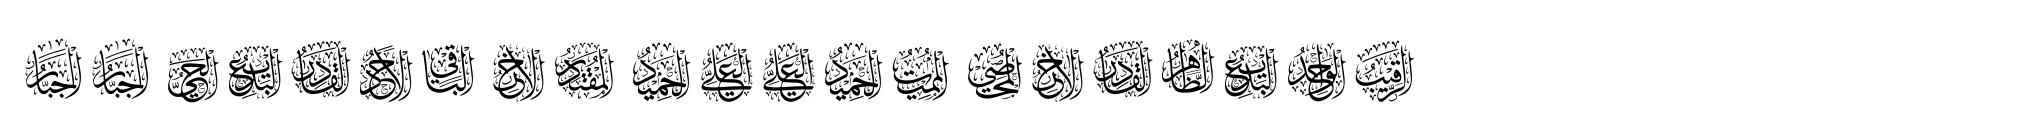 99 Names of ALLAH Compact image